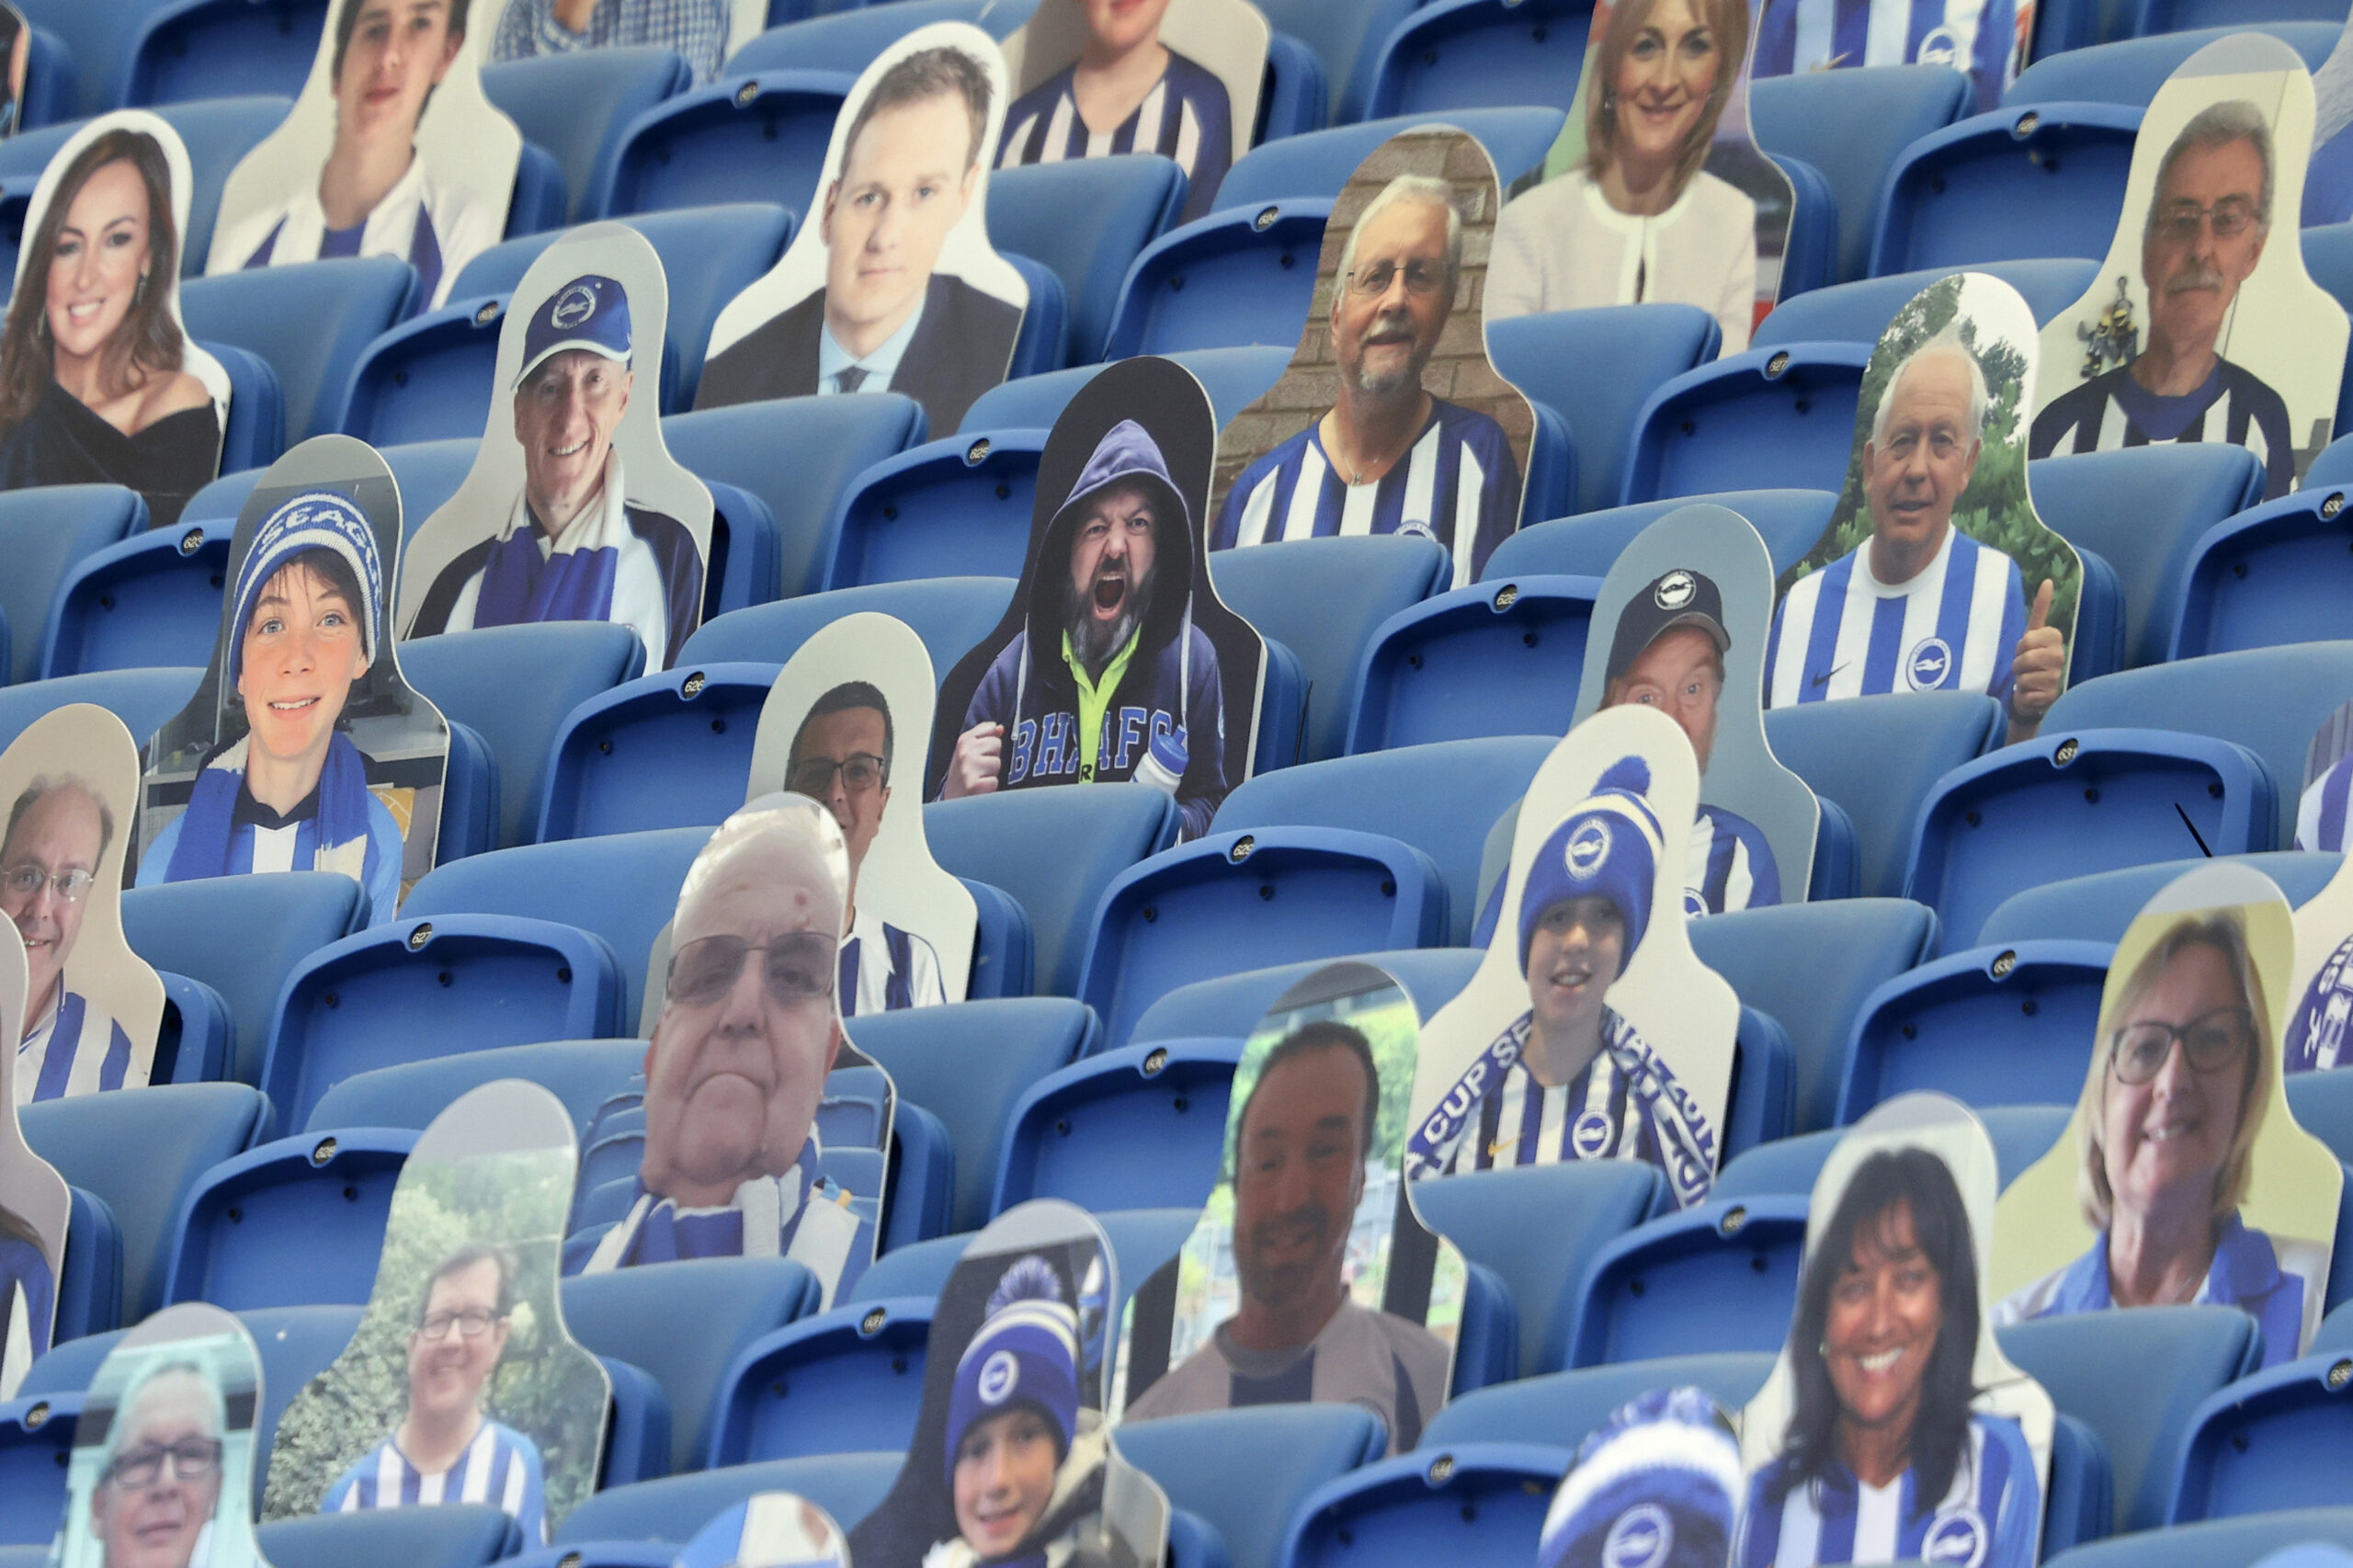 Fan cutouts at an English Premier League soccer game